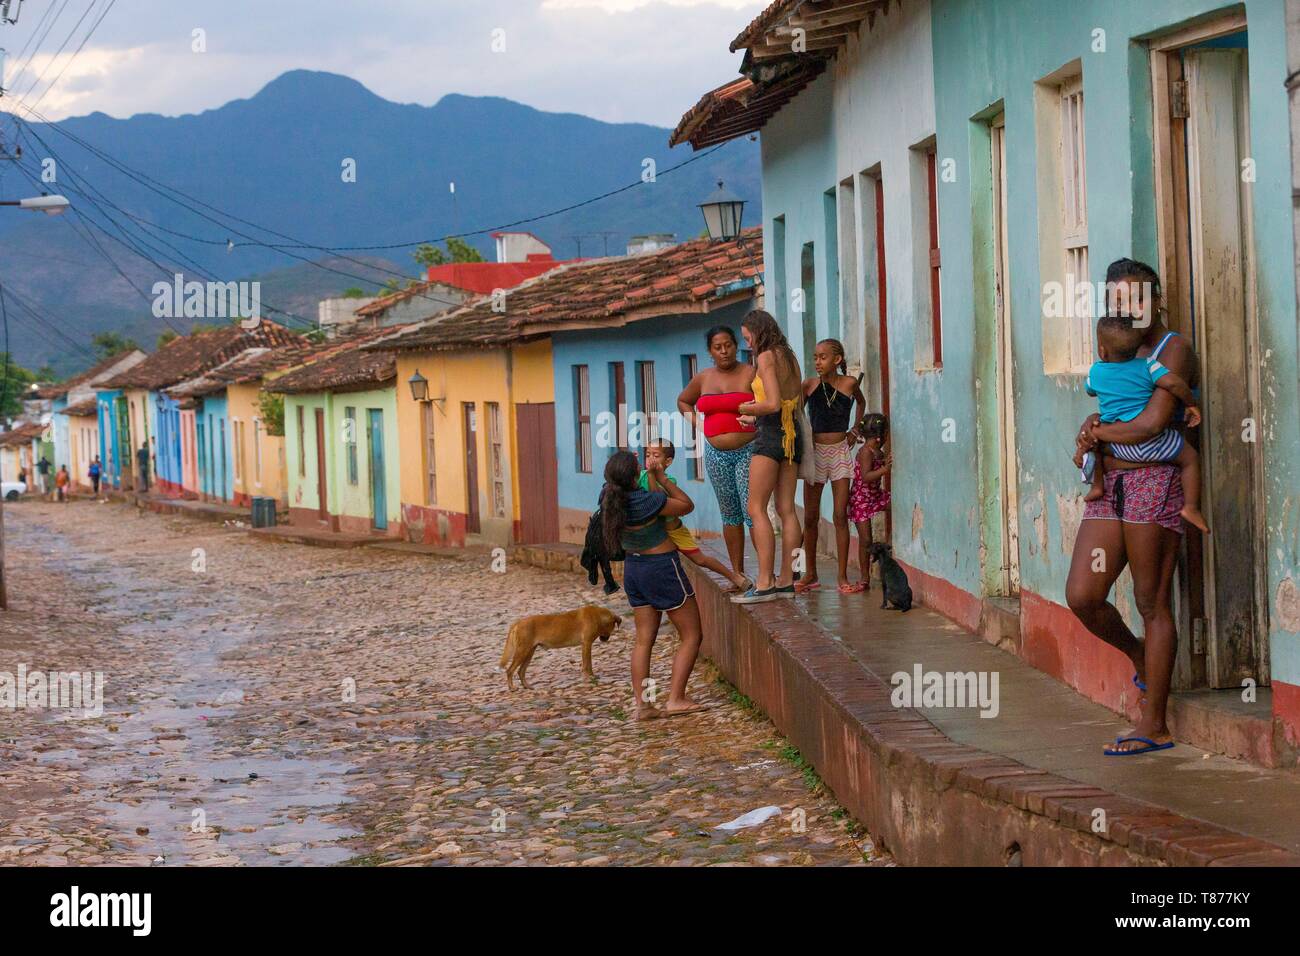 Cuba, Sancti Spiritus Province, Trinidad de Cuba listed as World Heritage by UNESCO, street with colorful facades Stock Photo